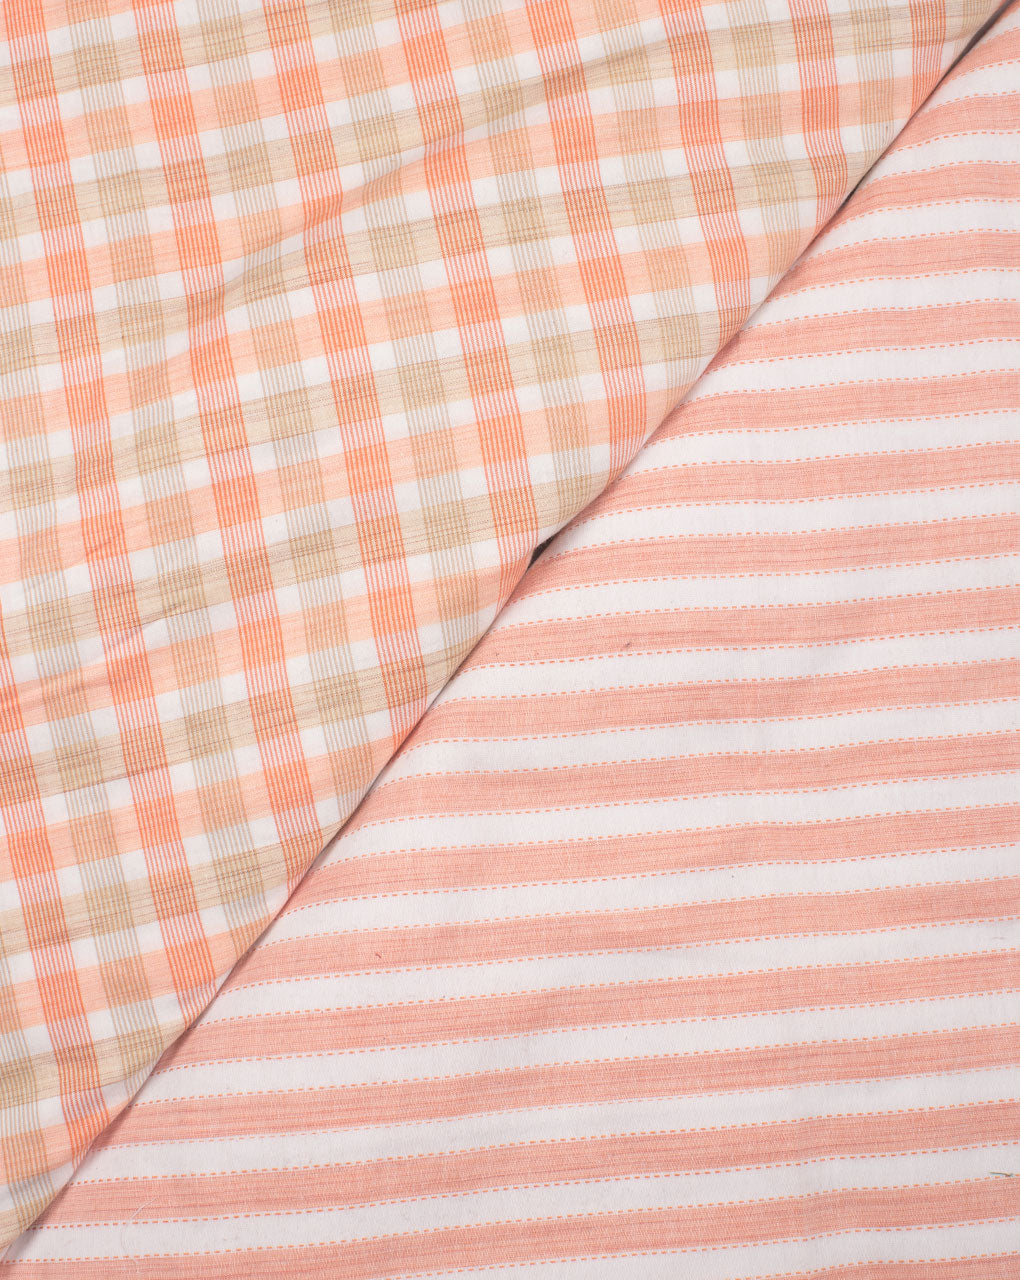 Orange White Stripes Pattern Woven Loom Textured Cotton Fabric - Fabriclore.com